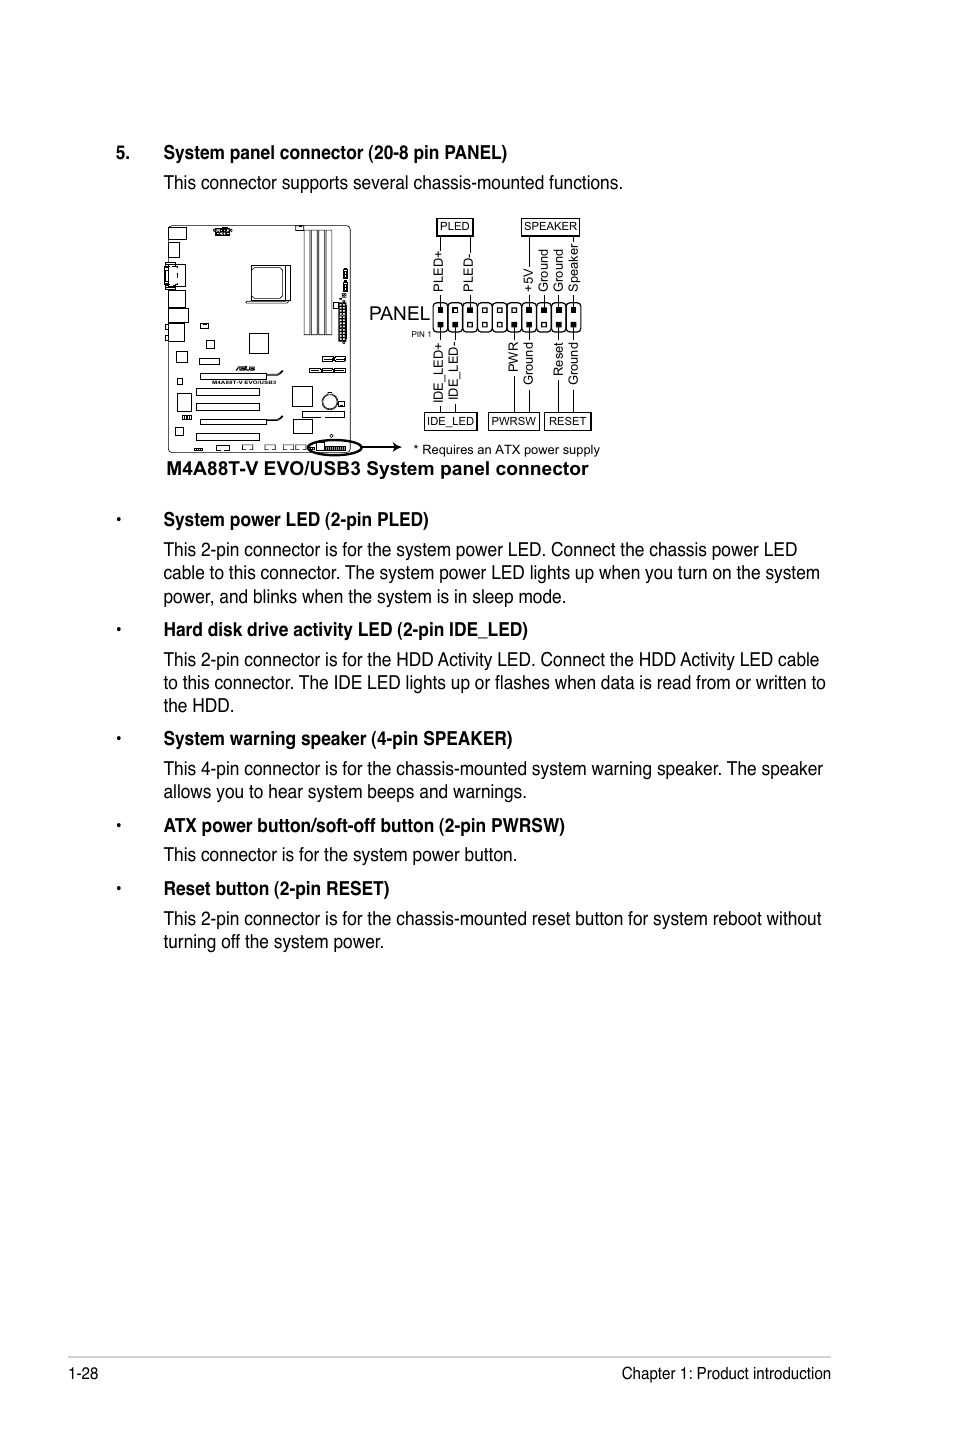 Panel, M4a88t-v evo/usb3 system panel connector | Asus M4A88T-V EVO/USB3  User Manual | Page 40 / 84 | Original mode